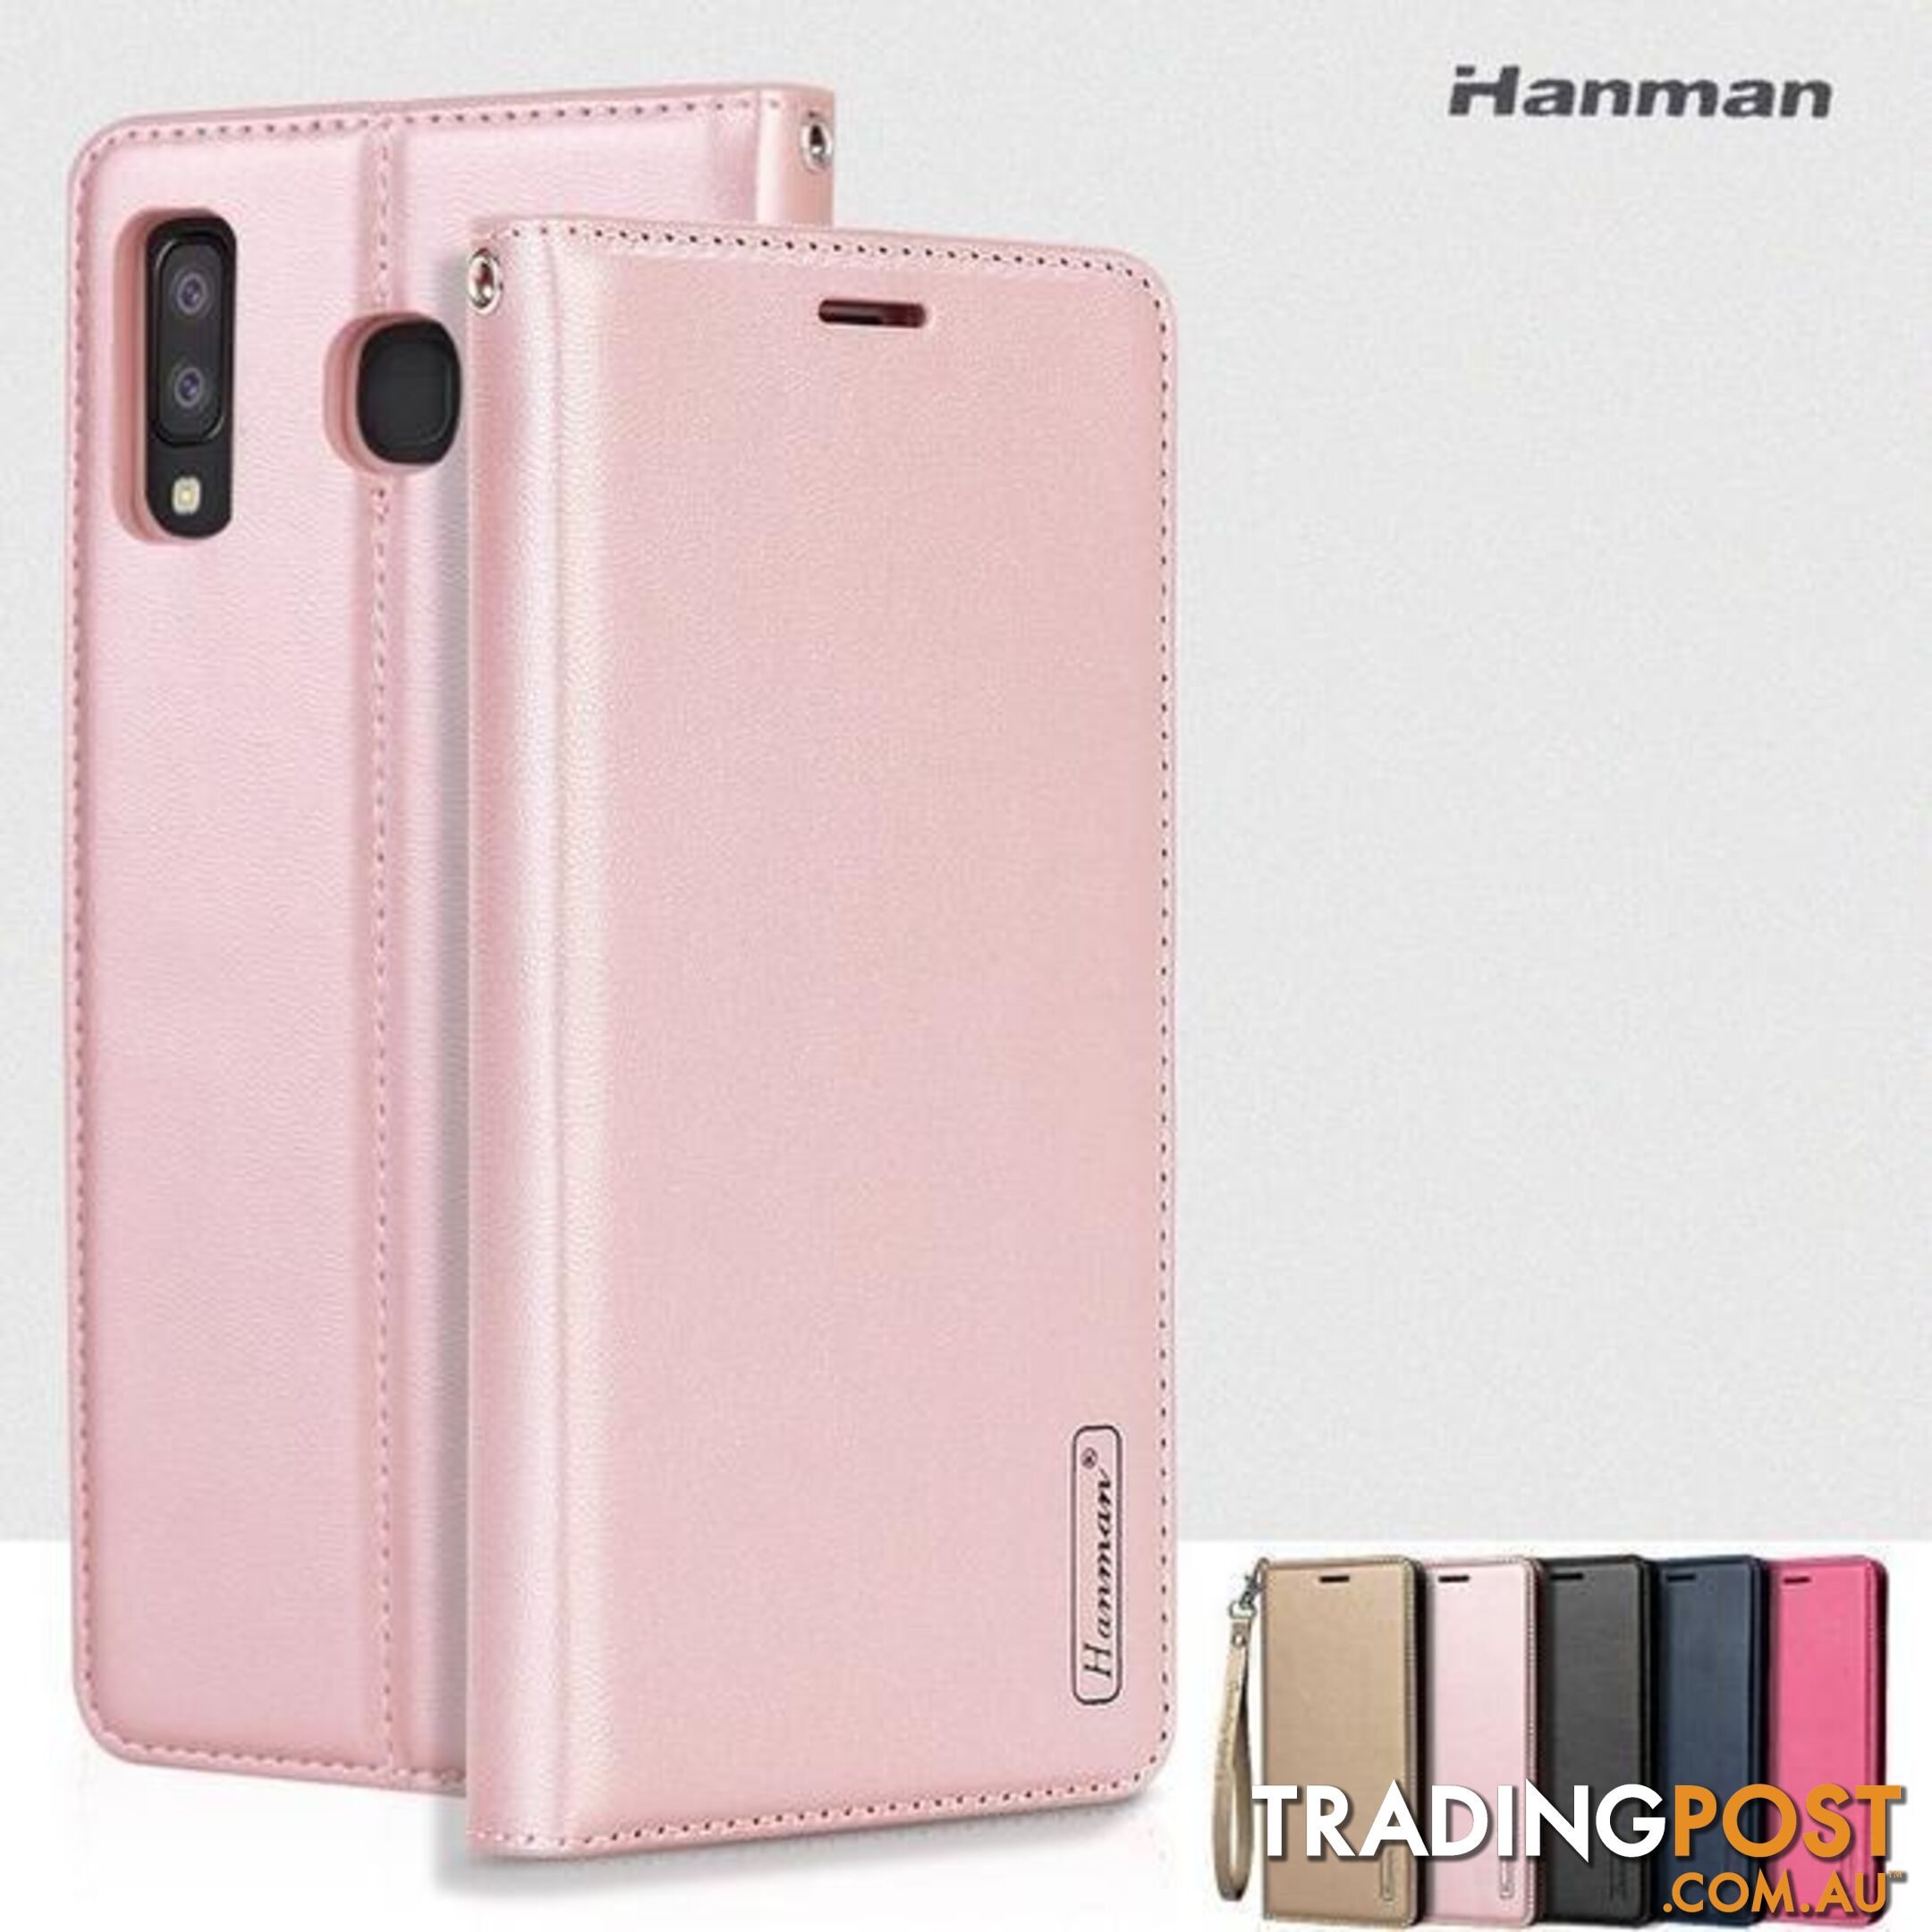 Samsung Galaxy Hanman Wallet Style Cases - 100842 - Cases